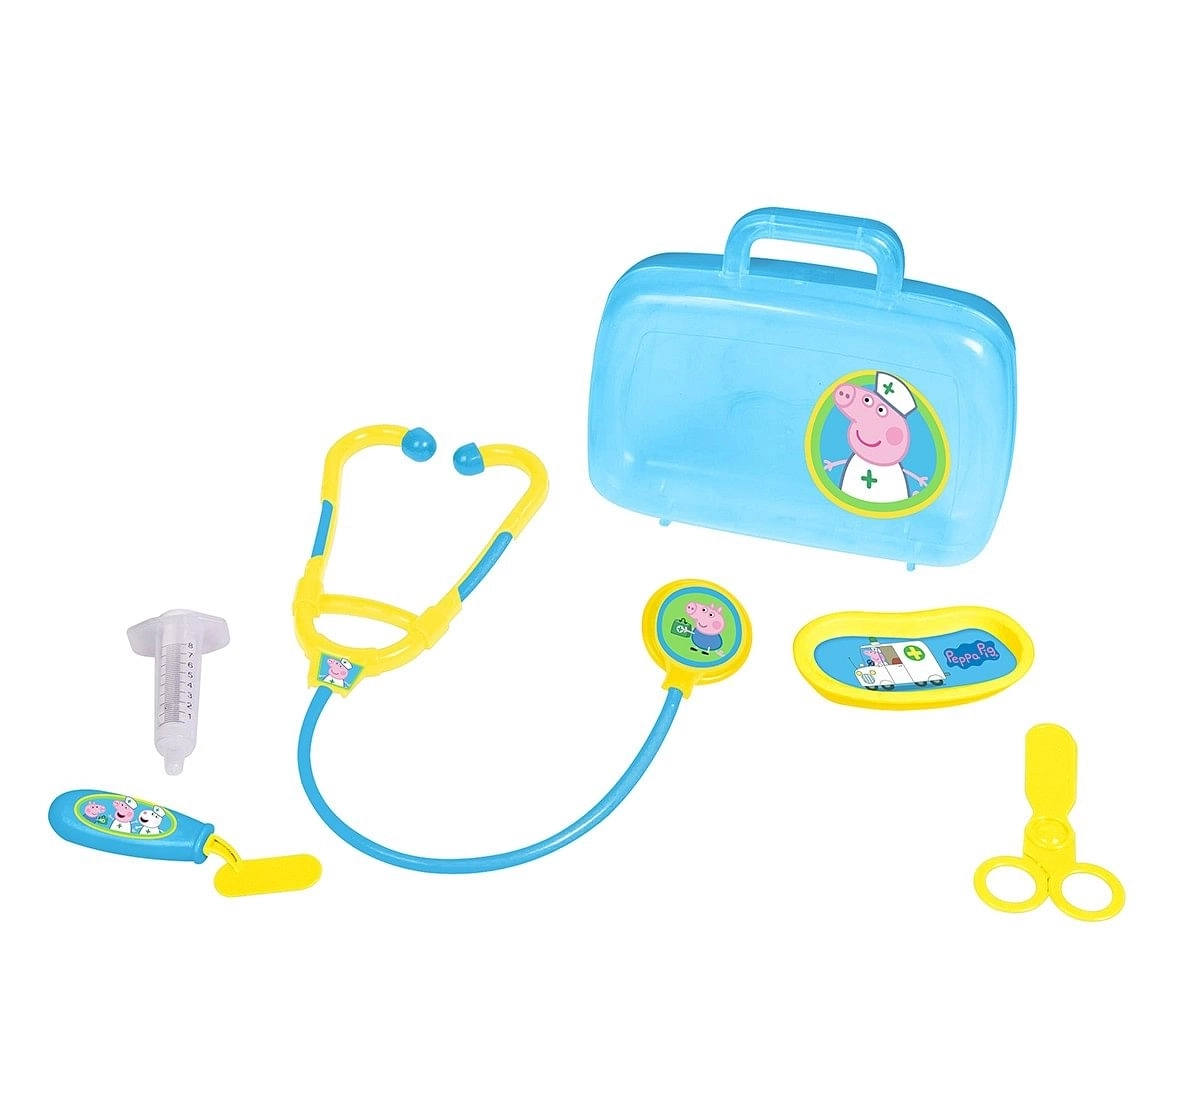 Peppa Pig  Medical Case Roleplay sets for Kids age 3Y+ 